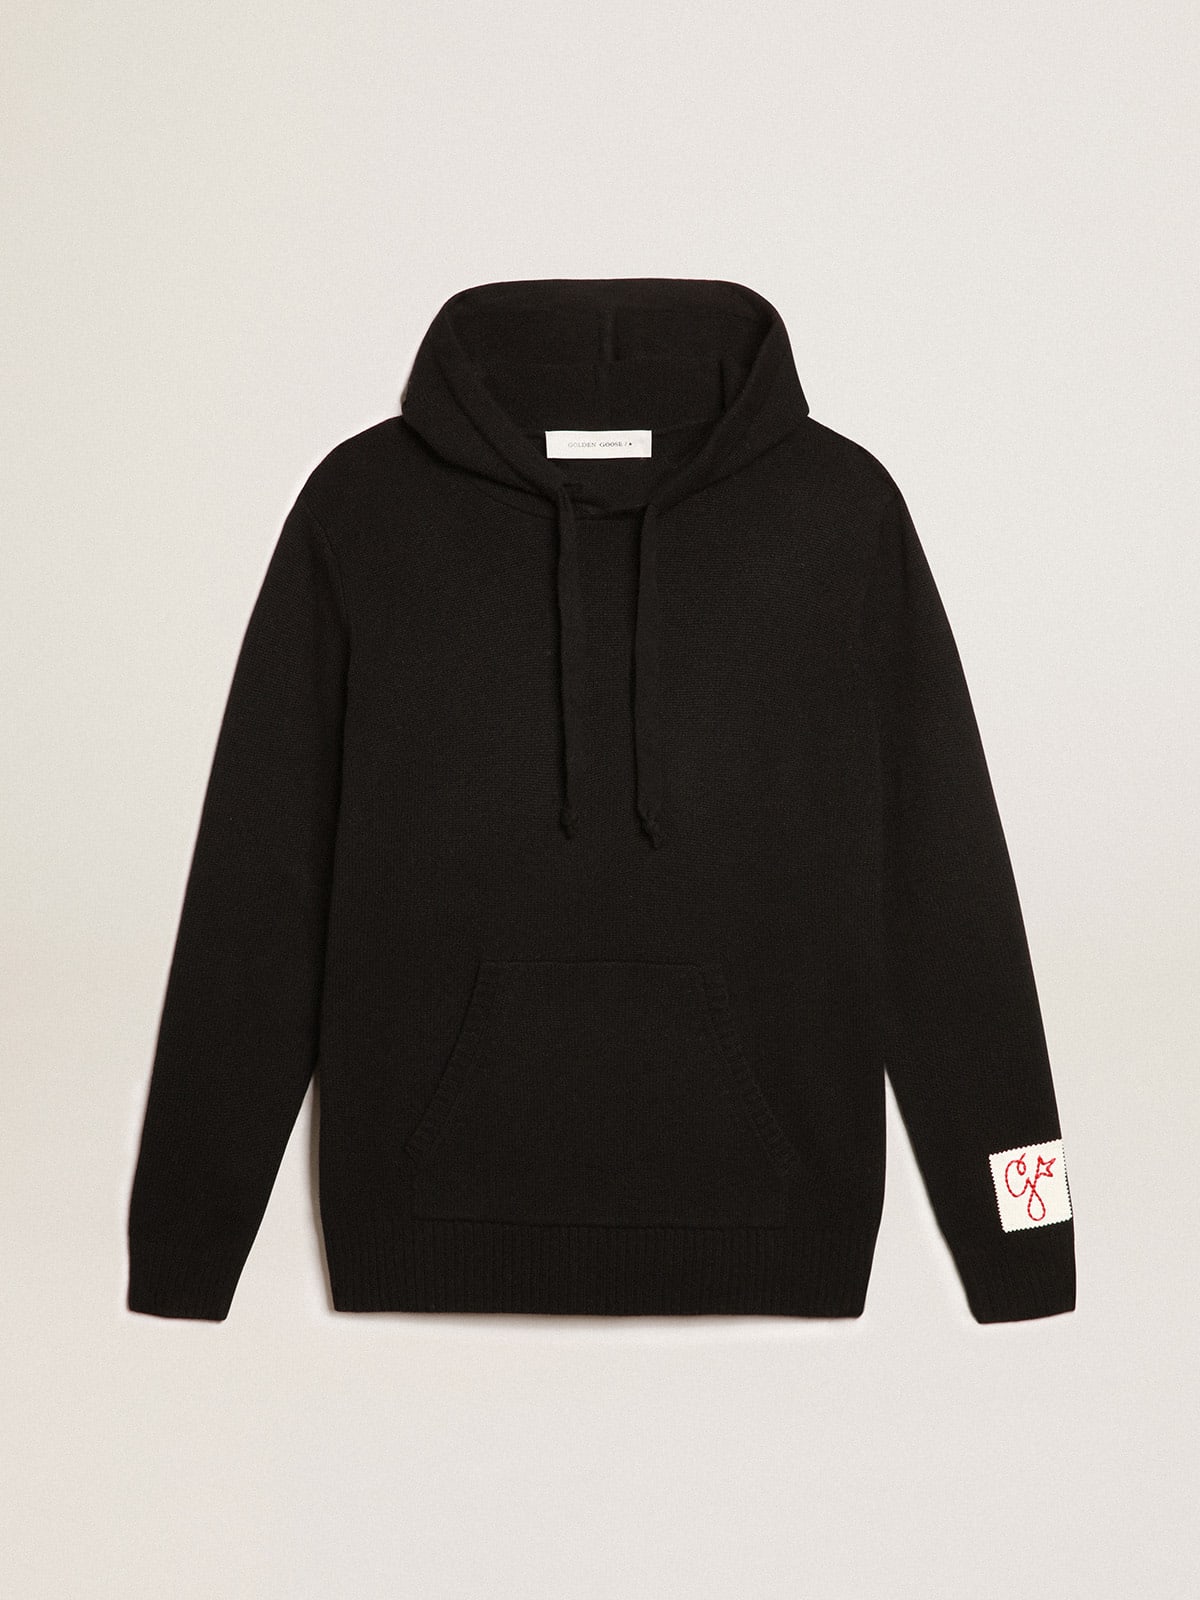 Men's black cashmere blend sweatshirt with hood